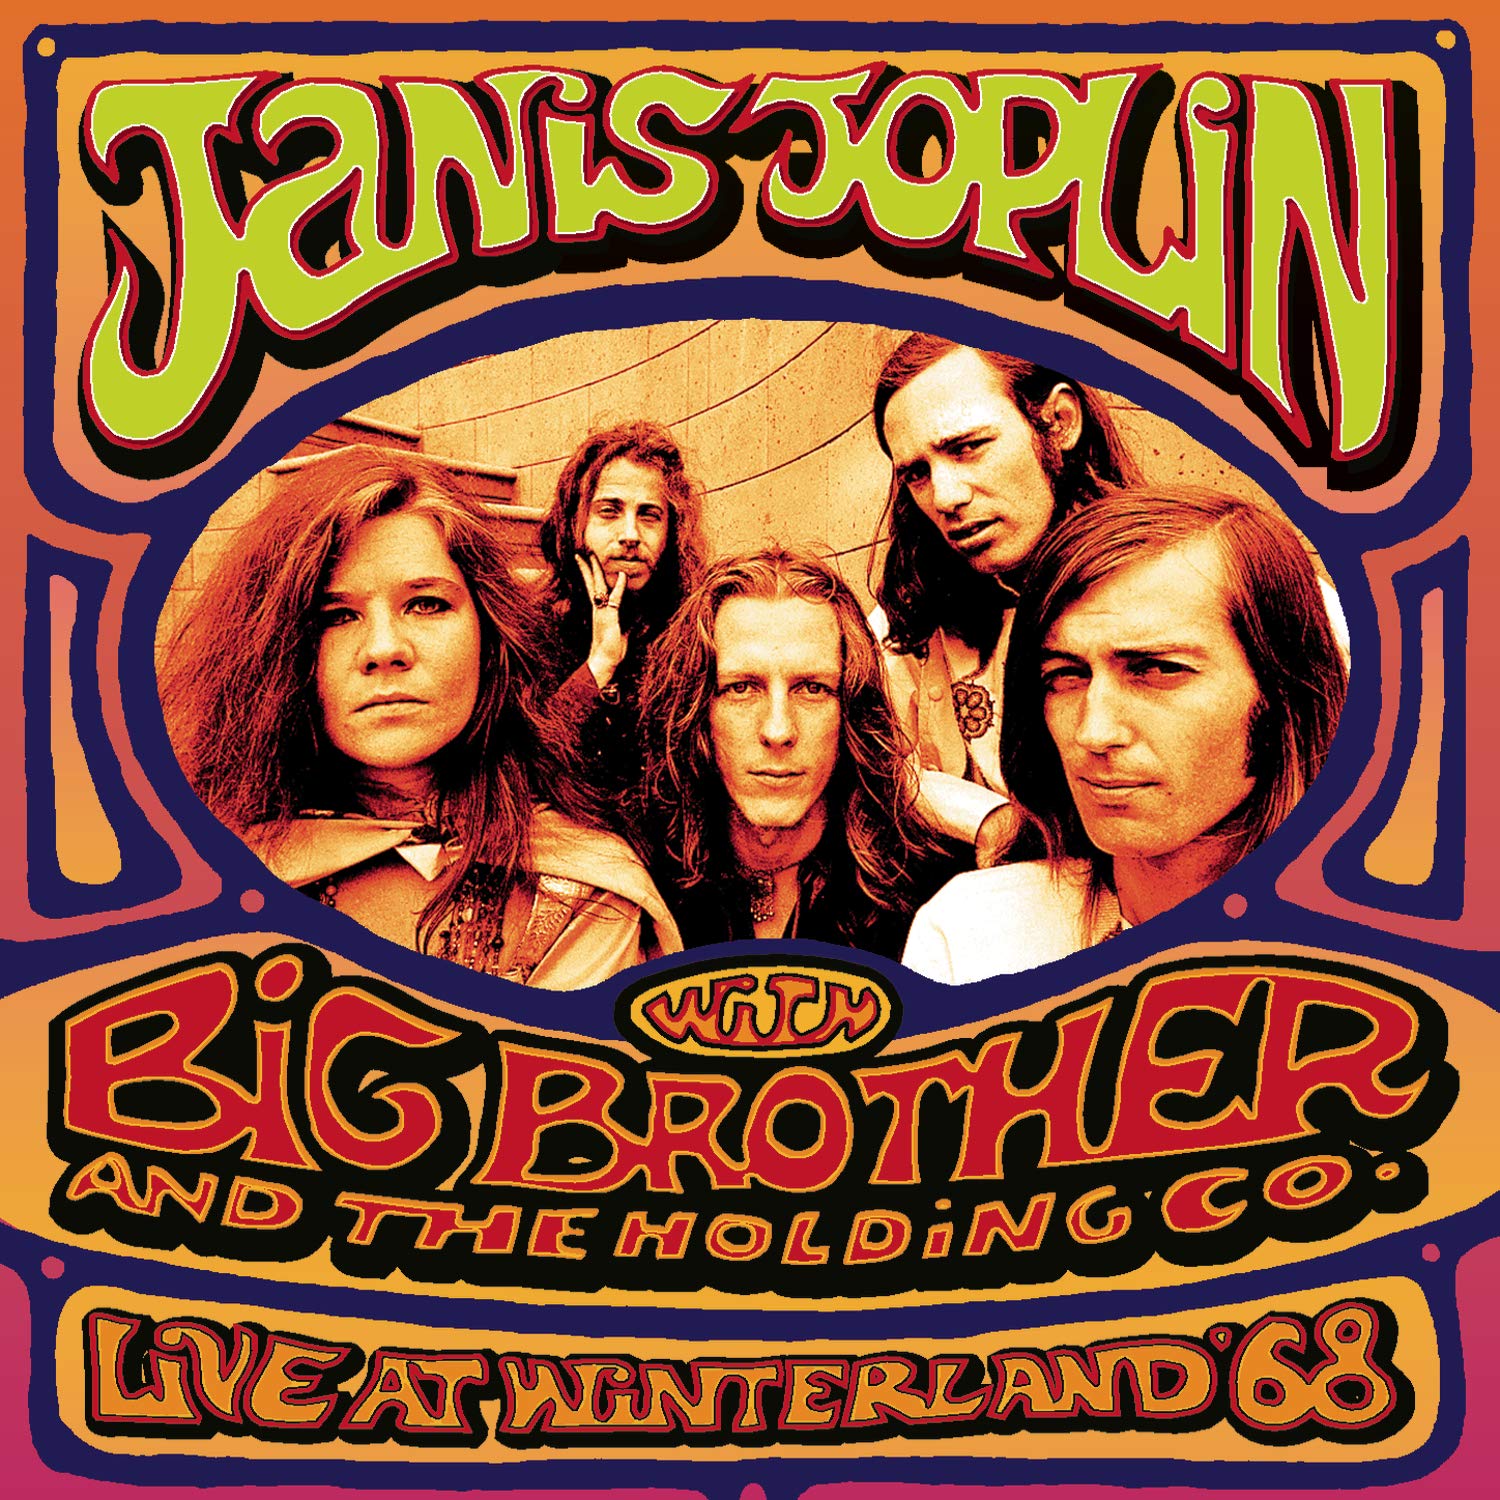 Joplin, Janis, Big Brother, Big Brother & The Holding Company - Janis Joplin Live At Winterland '68 - Amazon.com Music